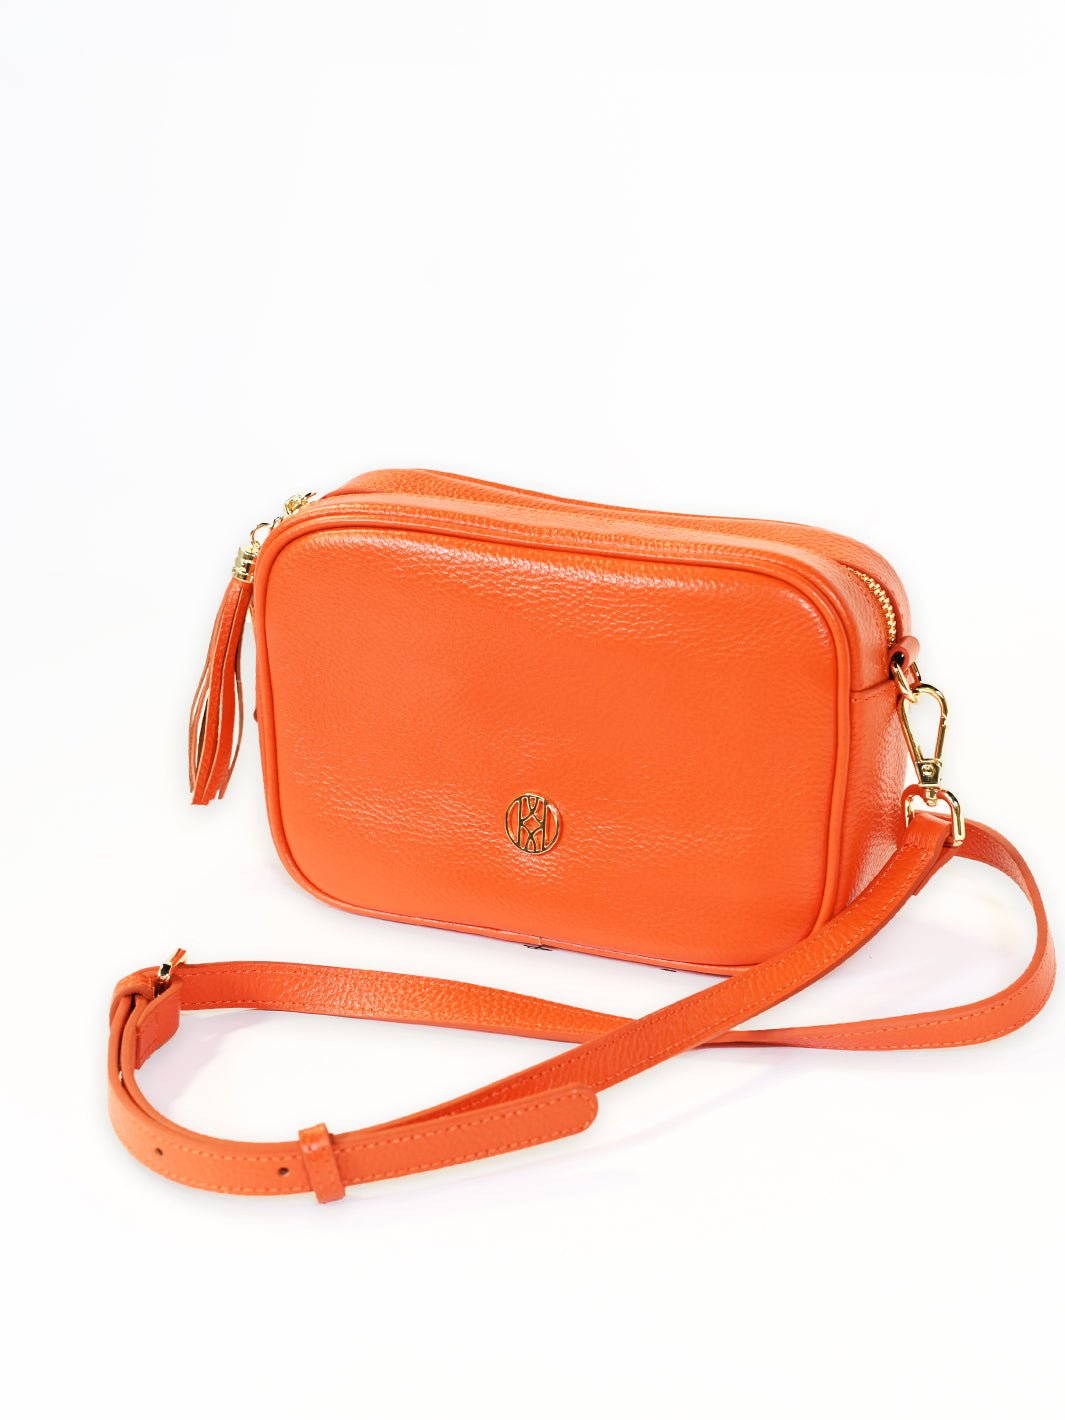 Leather Side Bag Mandarin ACCESSORY - HANDBAG jeanpierreklifa.com   